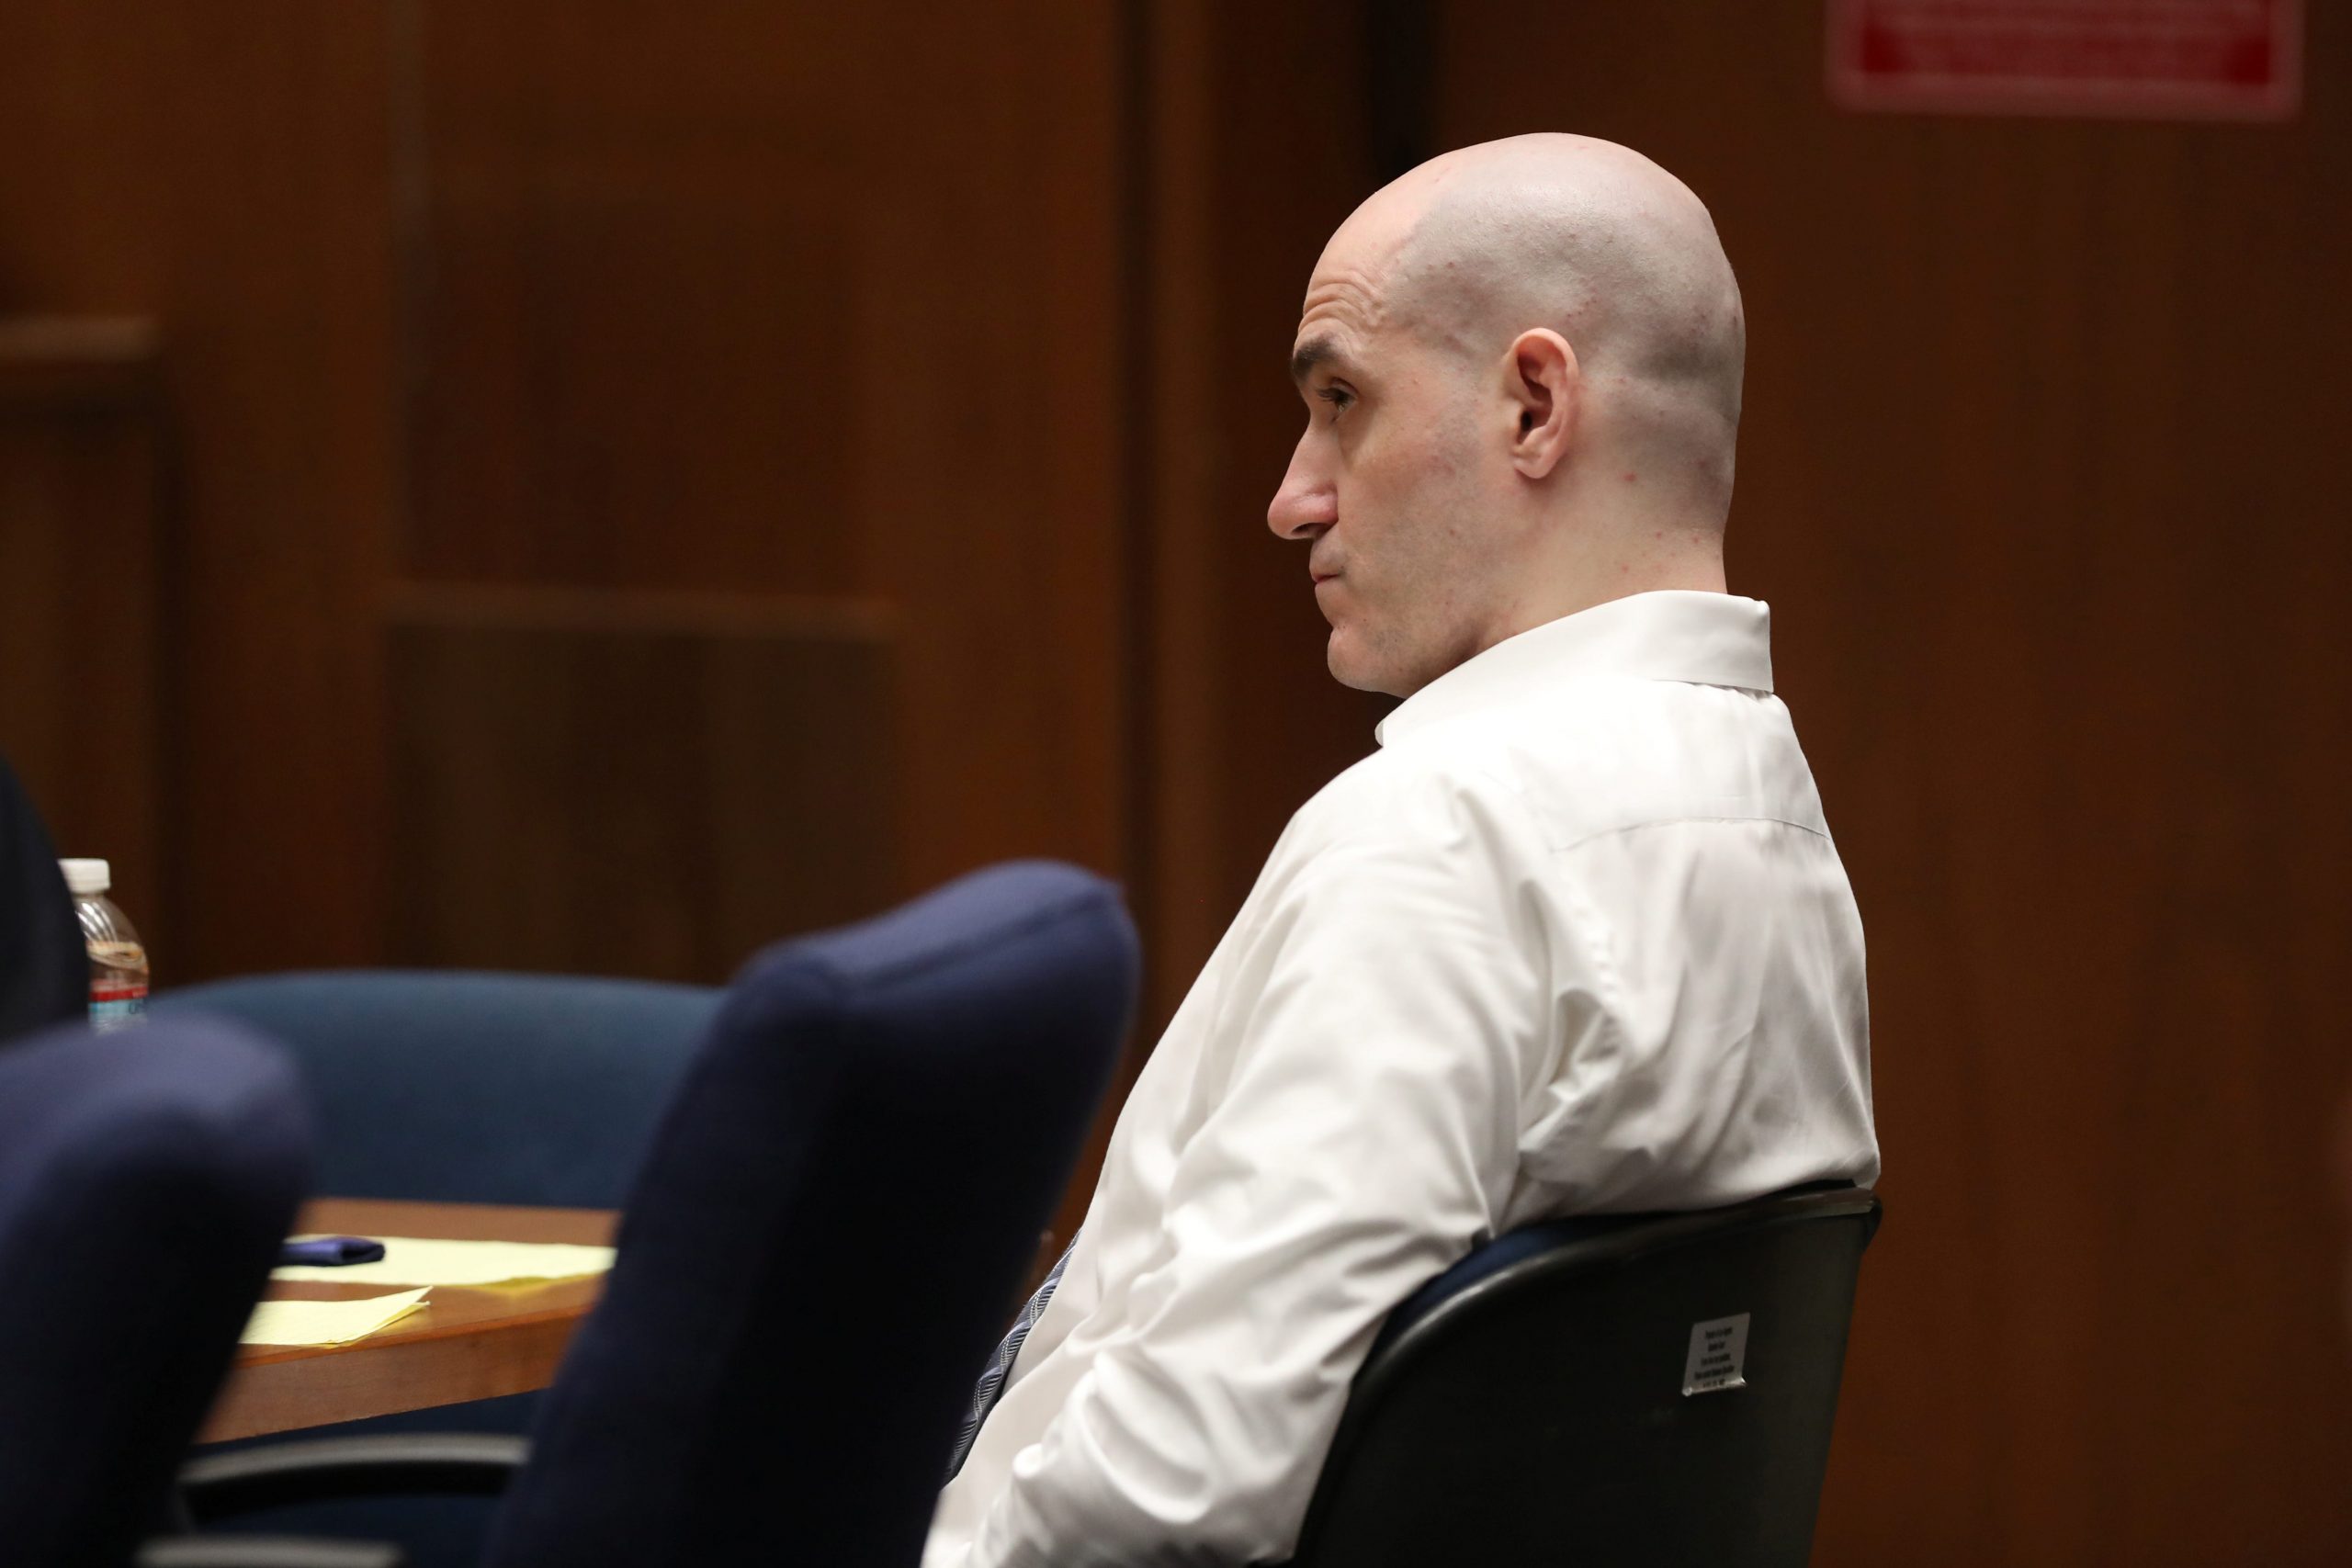 Michael Gargiulo sits in court during his murder trial in Los Angeles, California, U.S., August 6, 2019. REUTERS/Lucy Nicholson